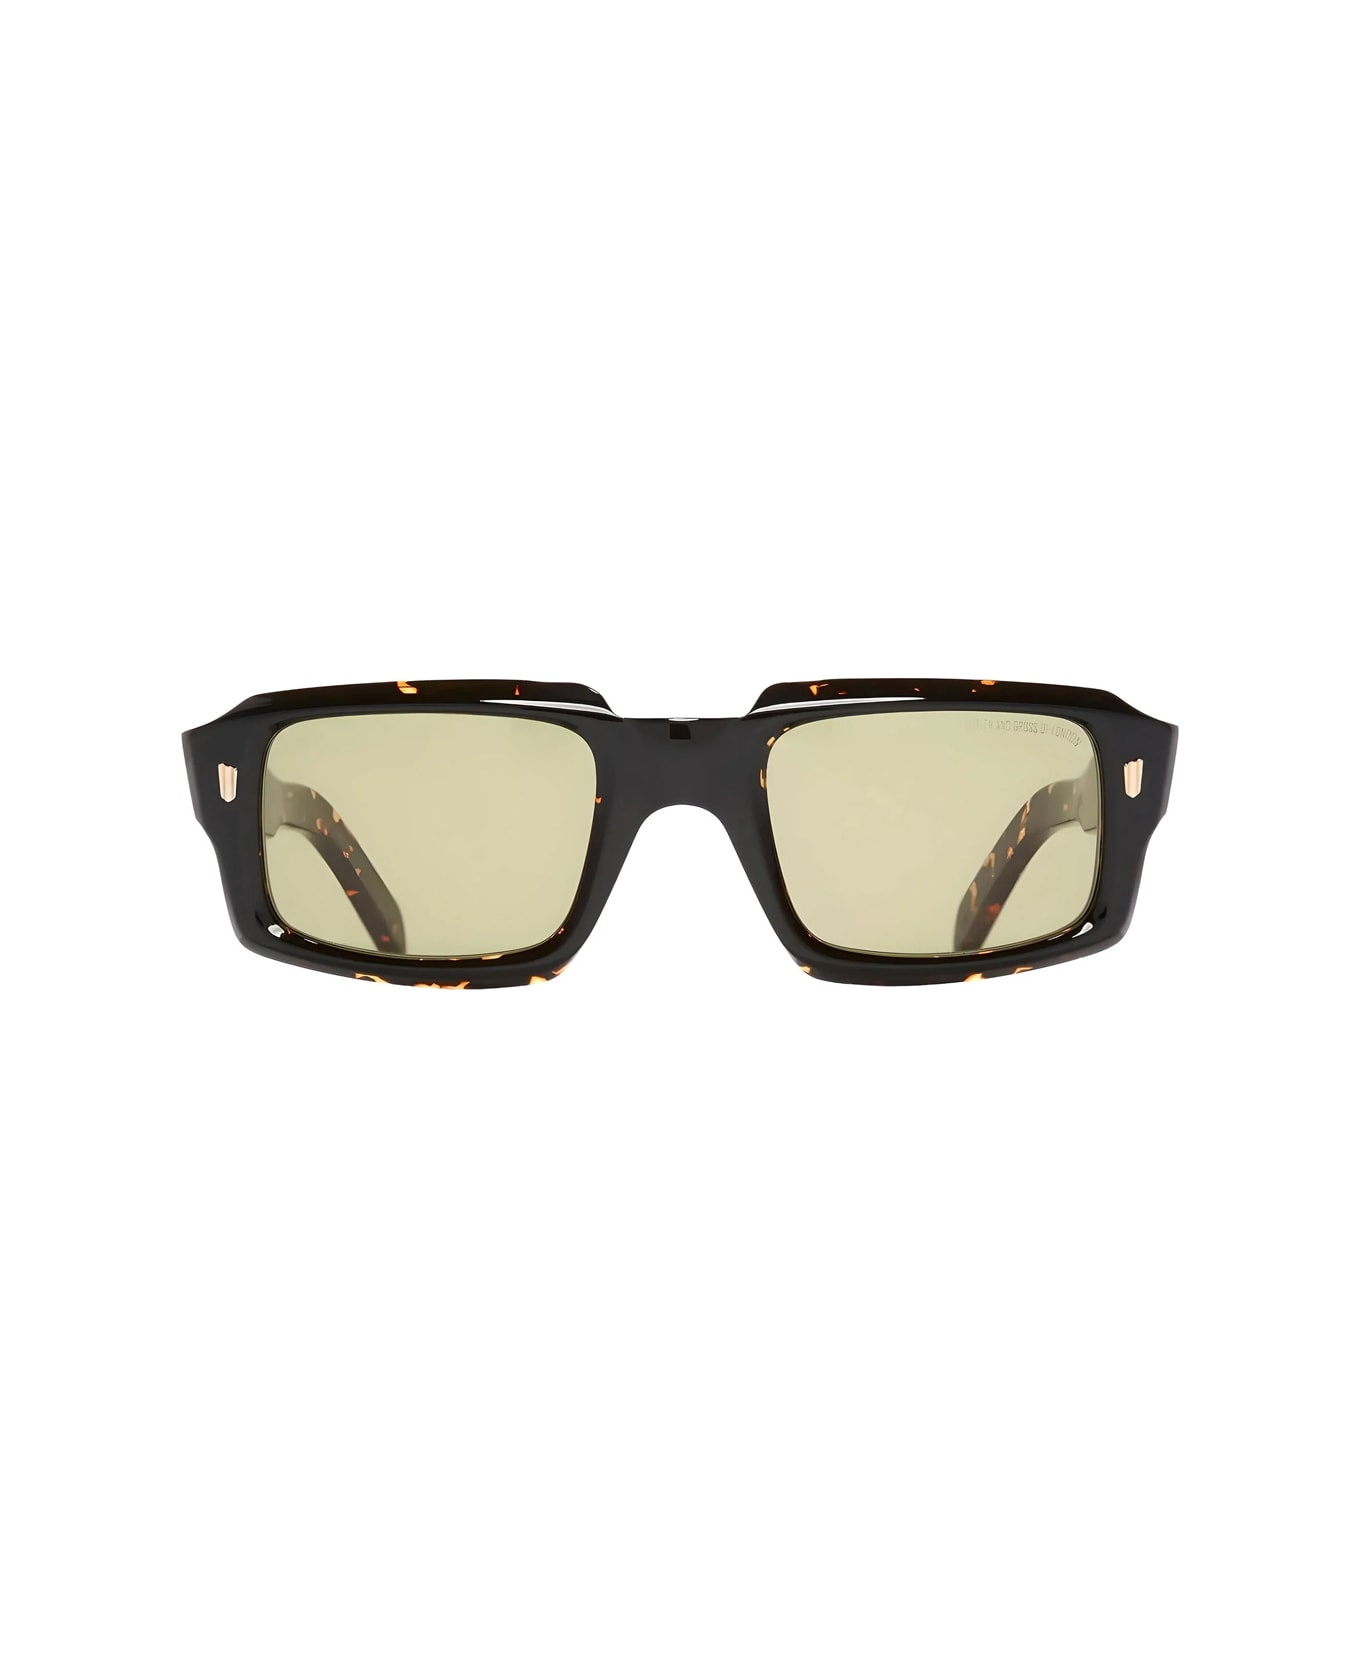 Cutler and Gross 9495 02 Black On Havana Sunglasses - Marrone